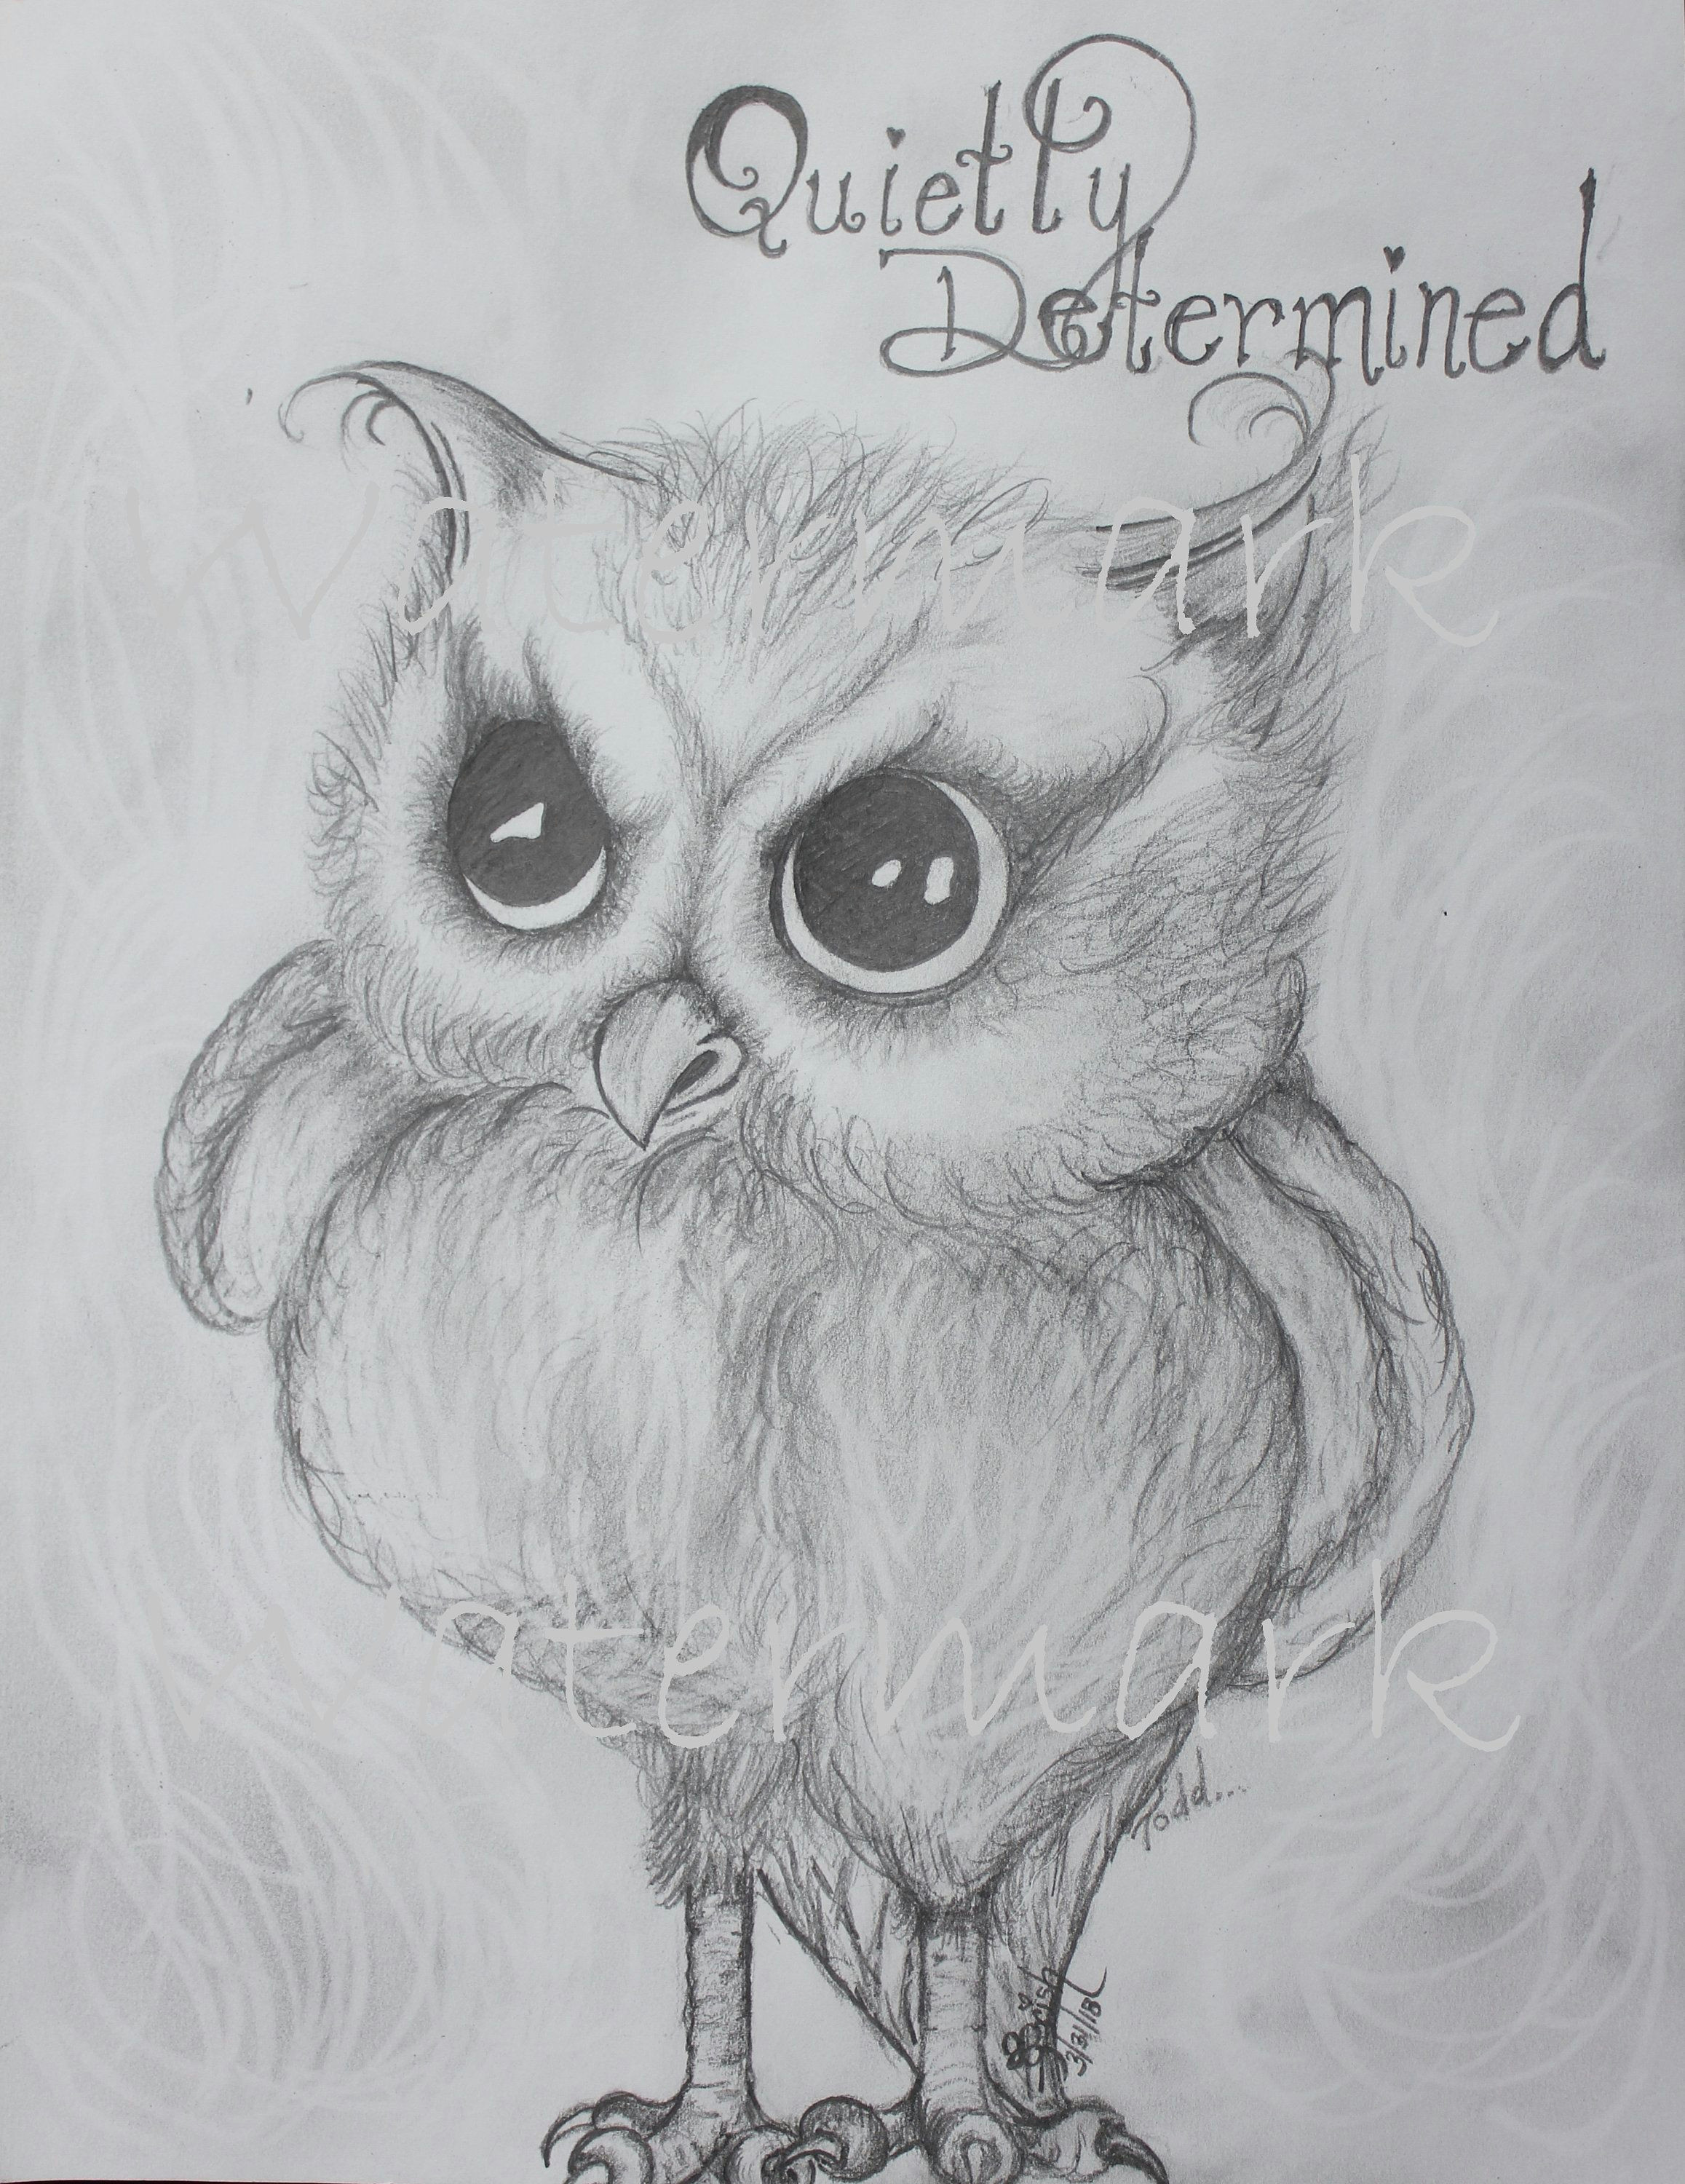 Drawings Of Owl Eyes Cute Quietly Determined Owl Cute Owl Print Determined Owl Sketch